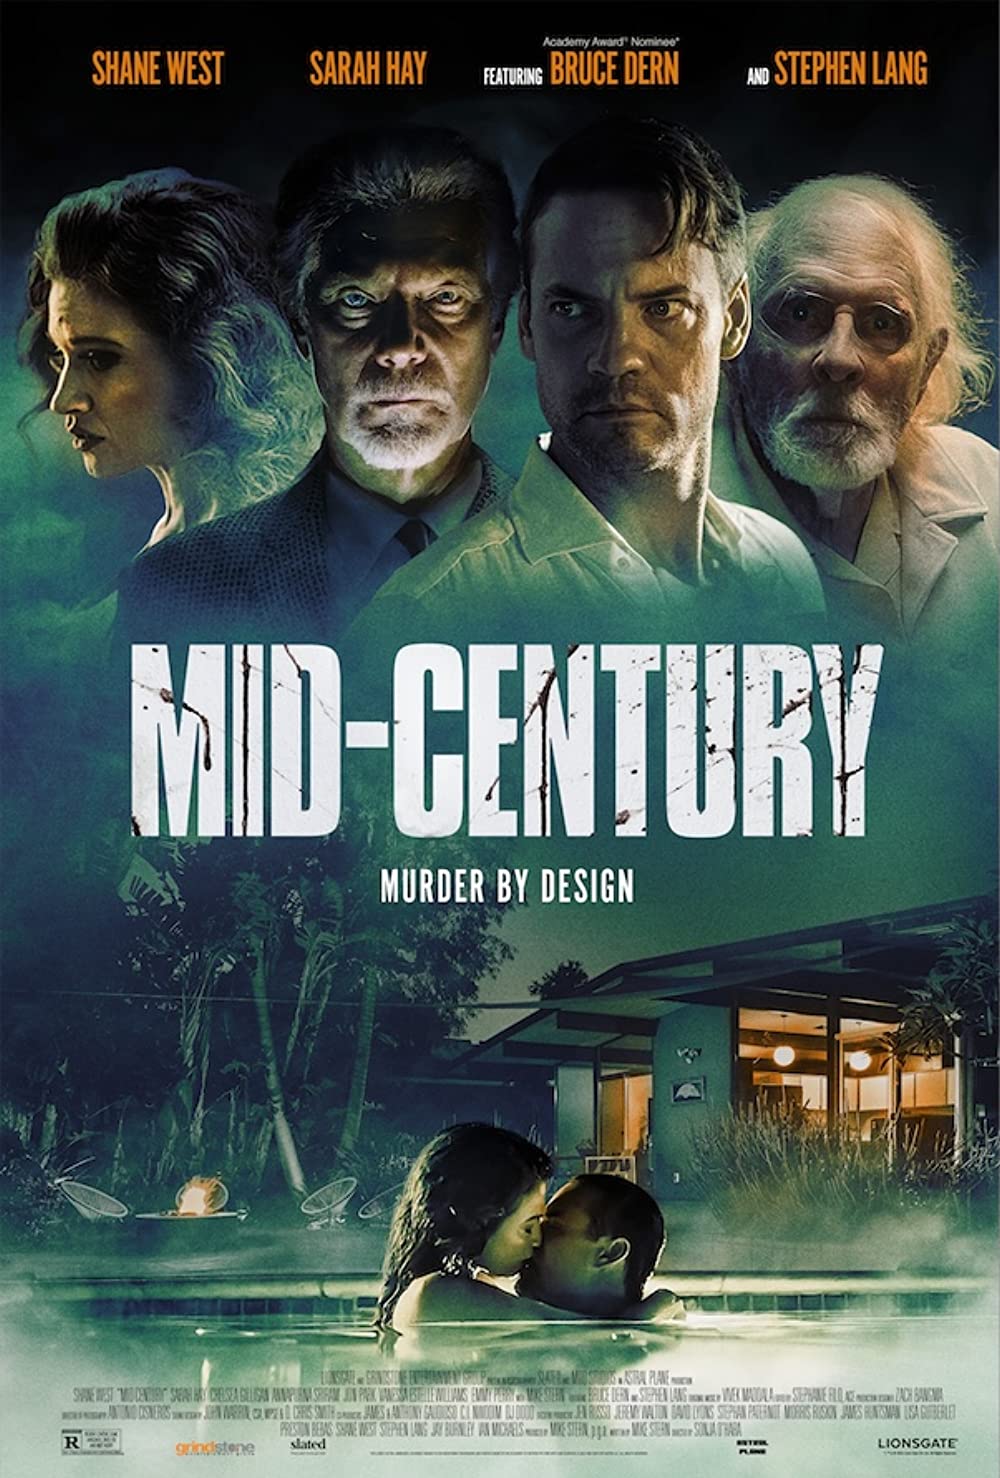 Mid-Century (2022) DVD Release Date